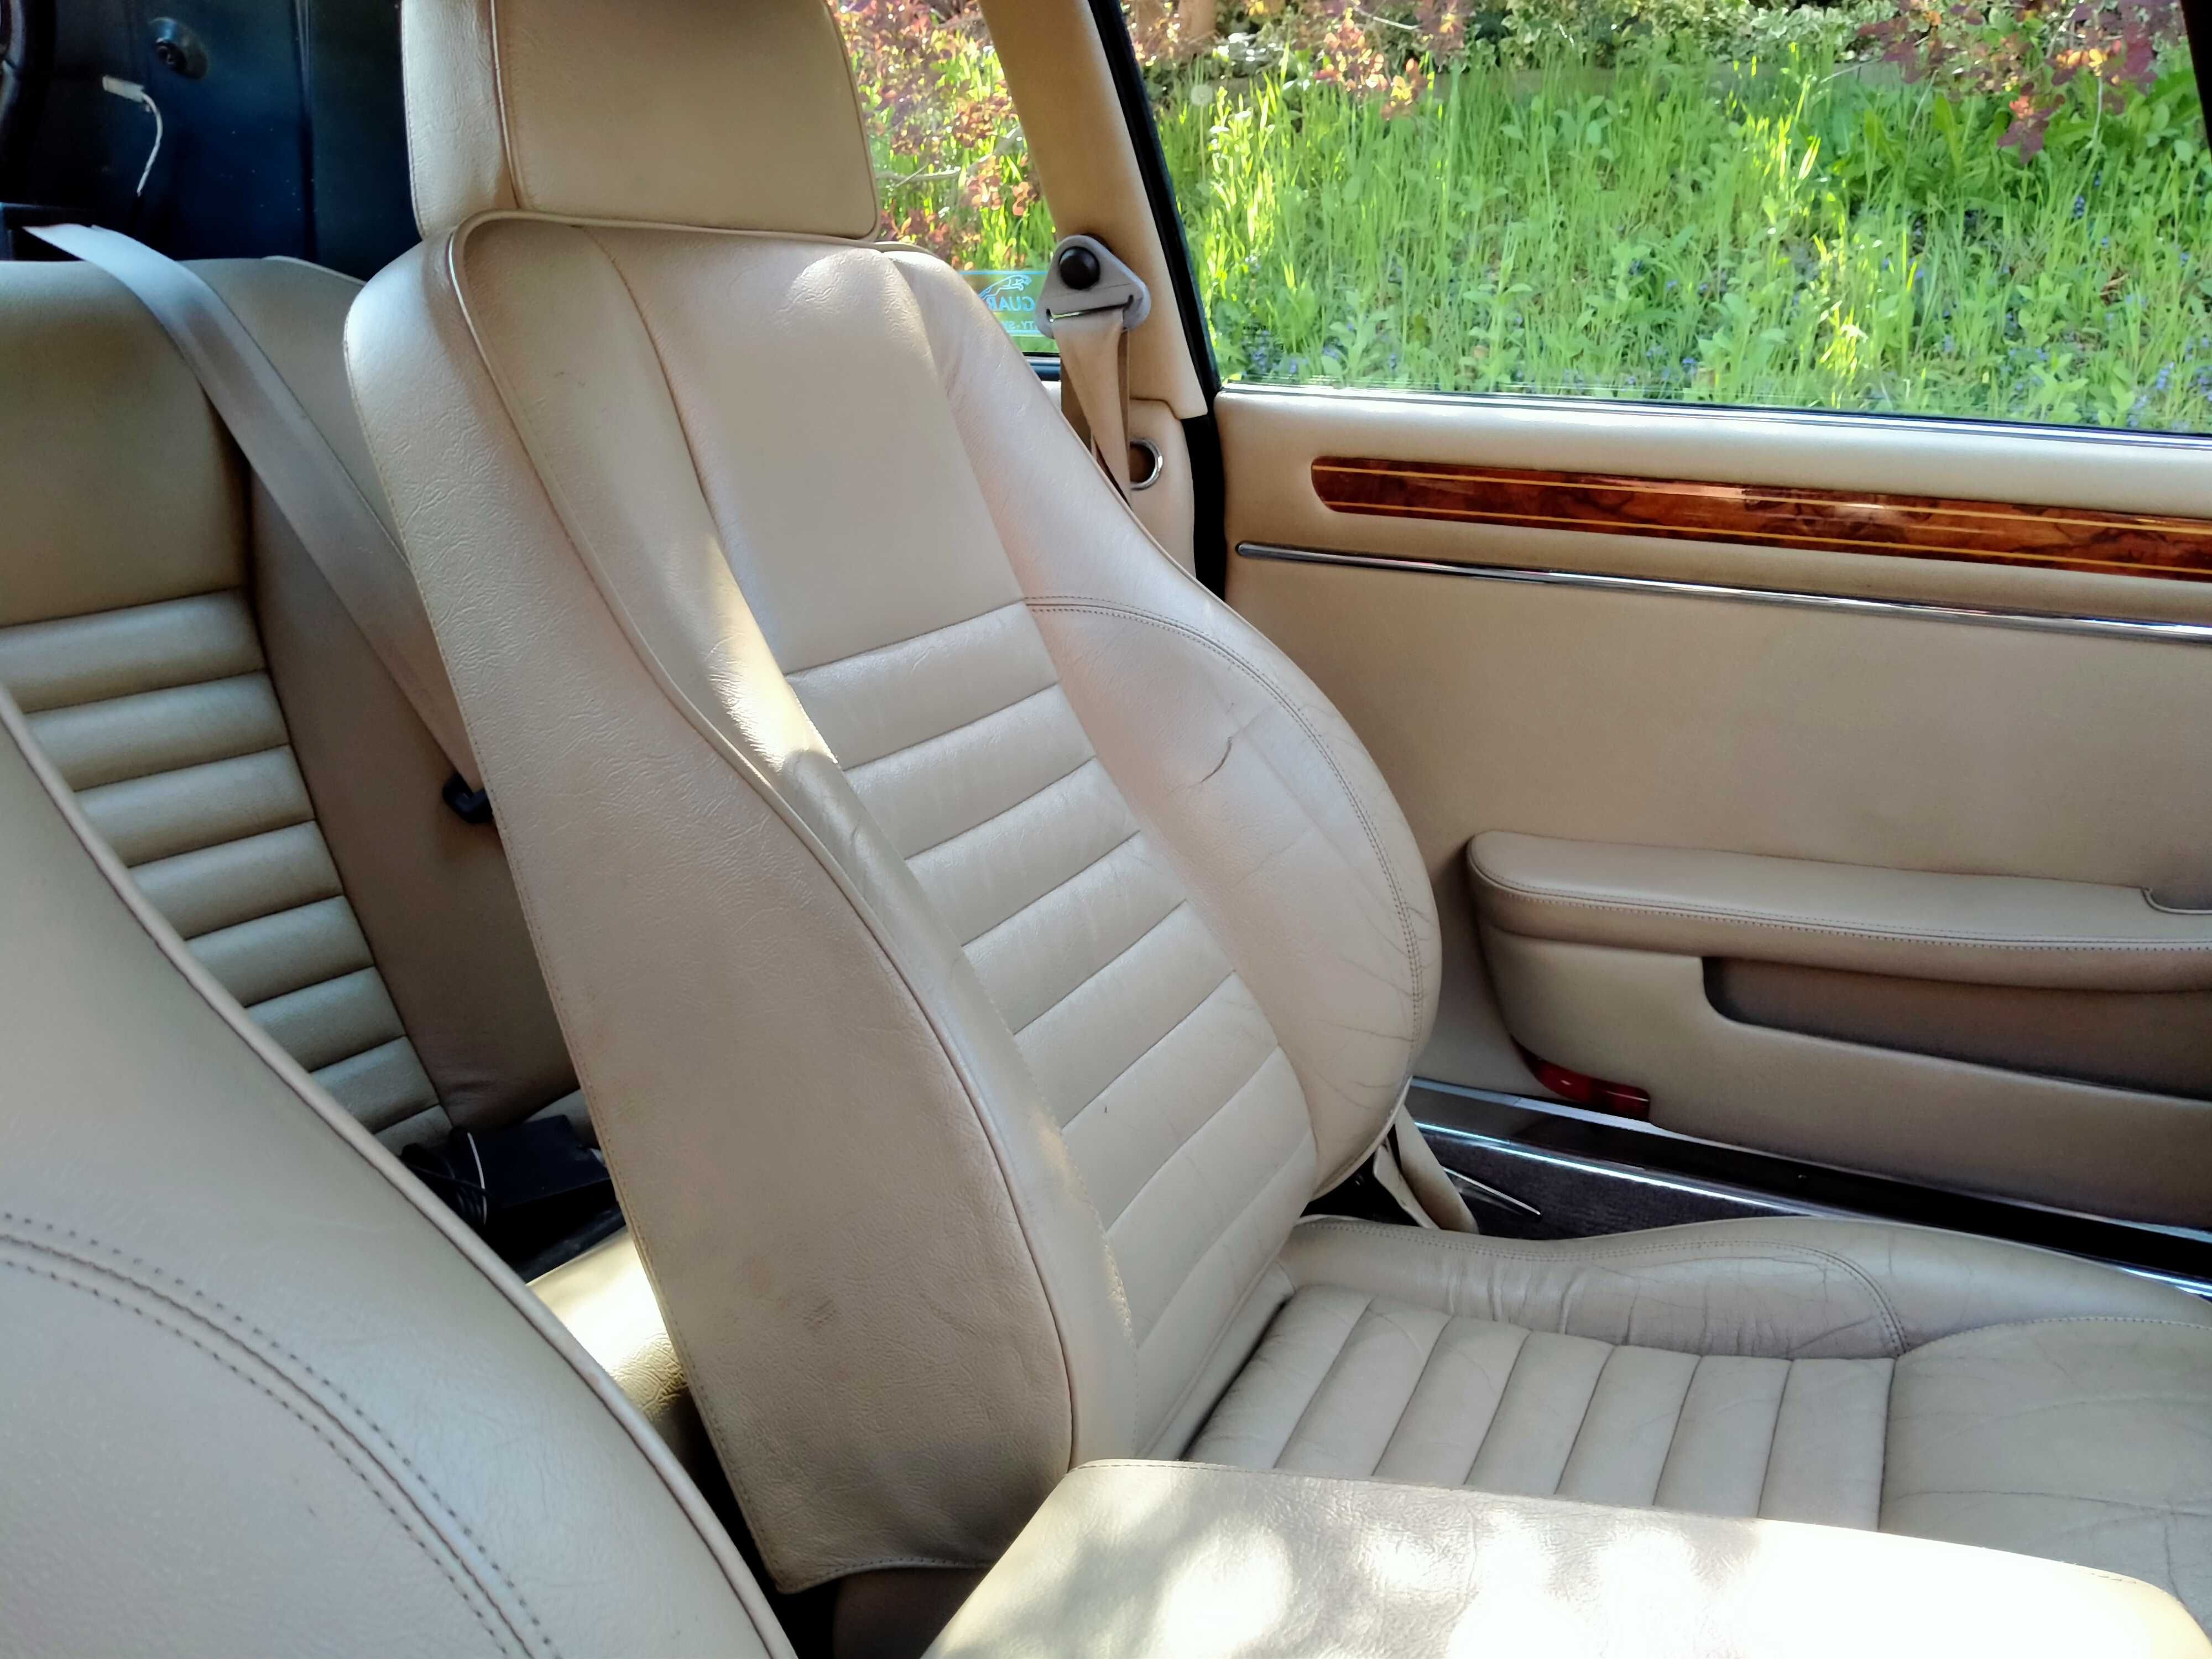 Sprzedam Jaguara XJs 1990r. coupe